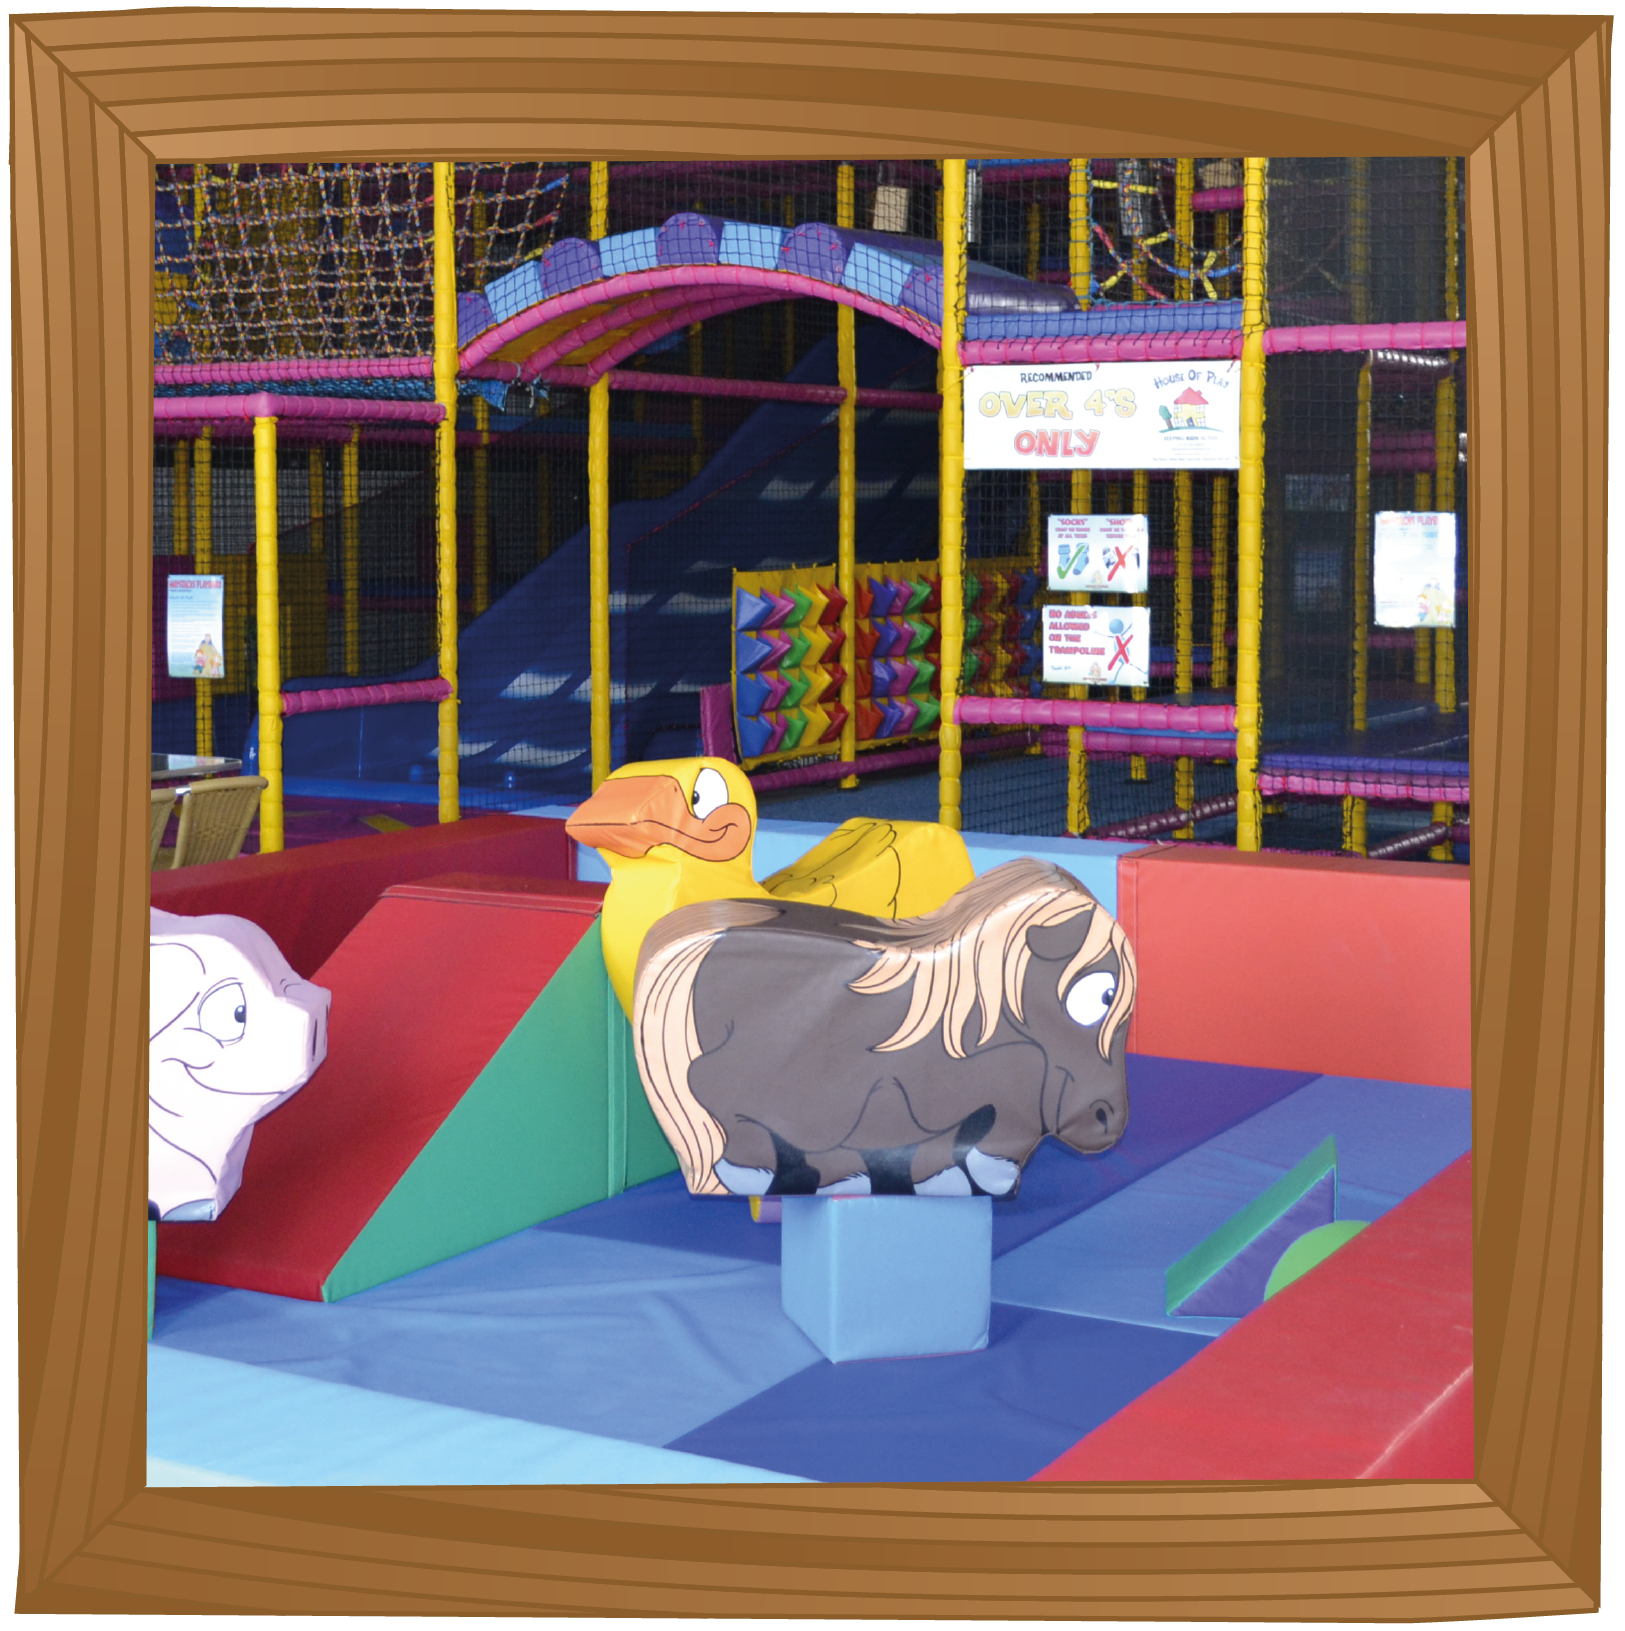 Hardys Animal Farm Indoor Play-03 - Hardys Animal Farm